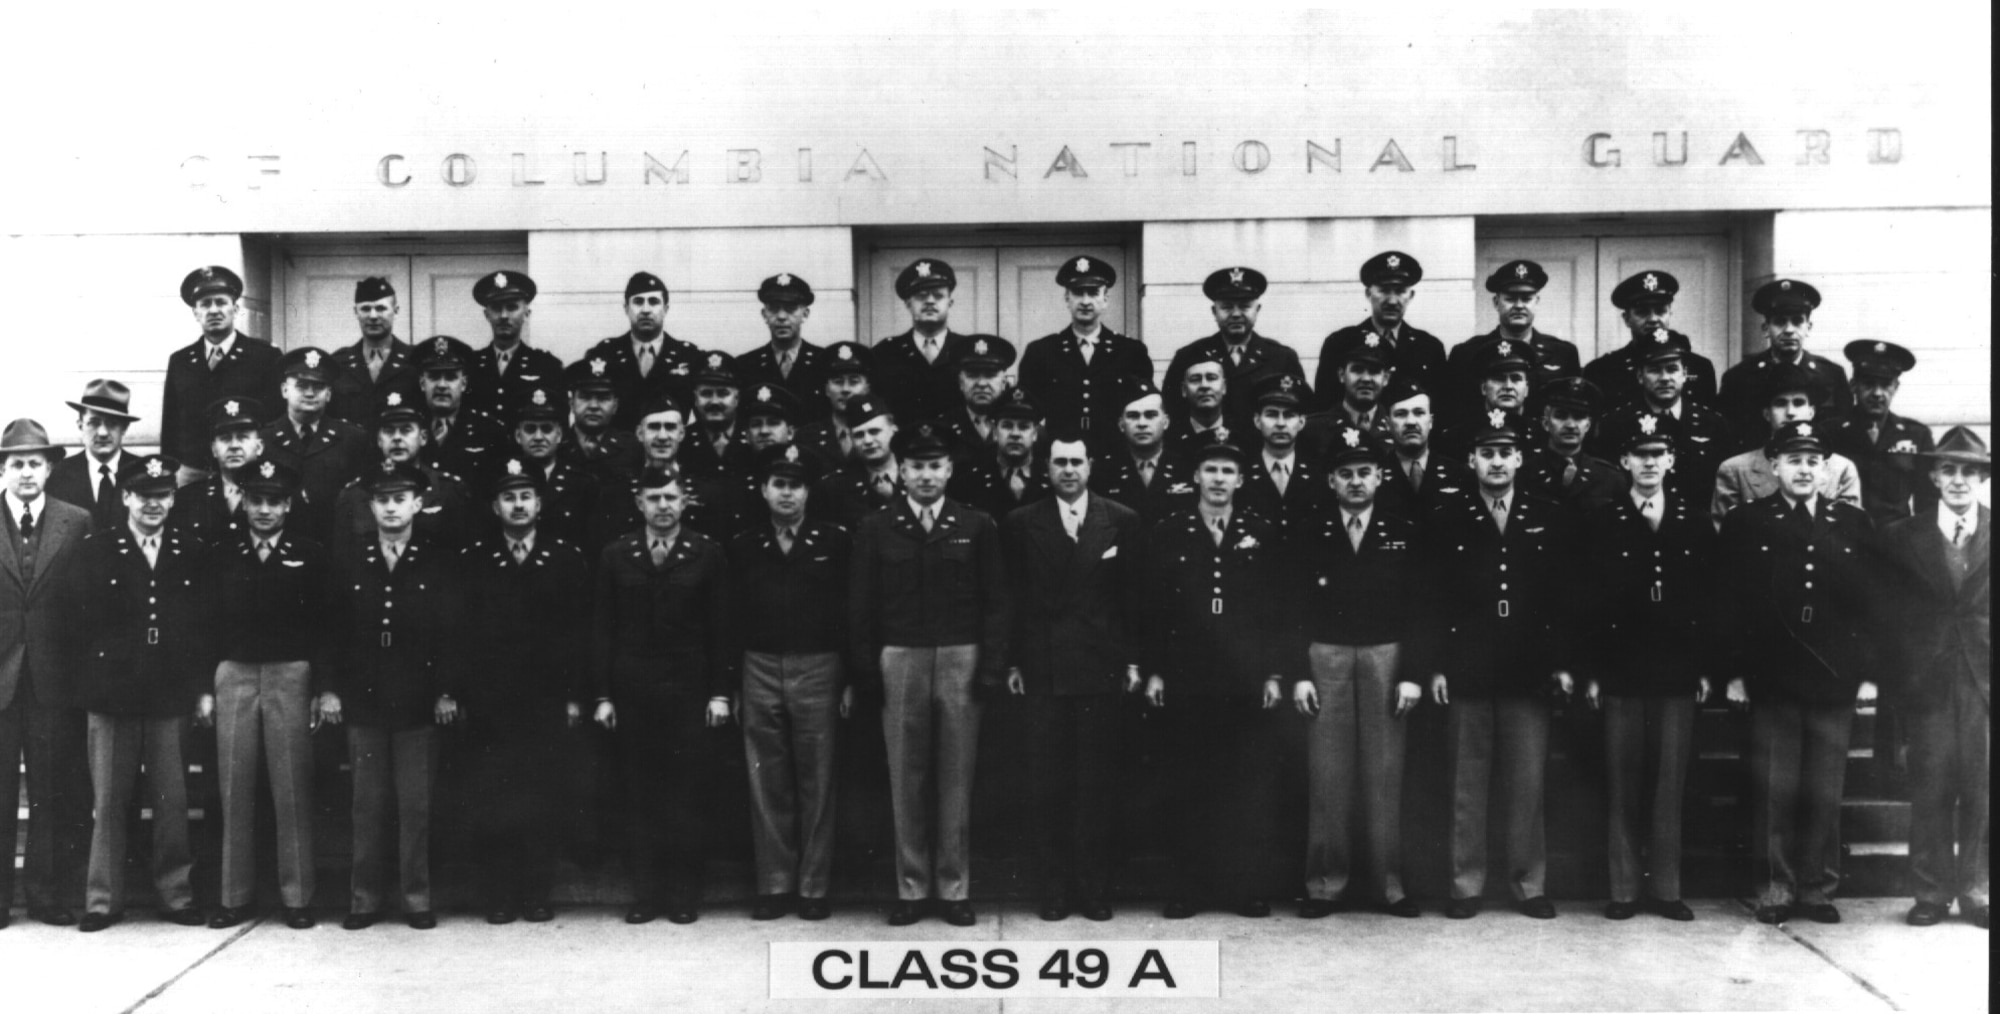 Class 49-A Group Photo: the OSI Training School’s first graduation class.